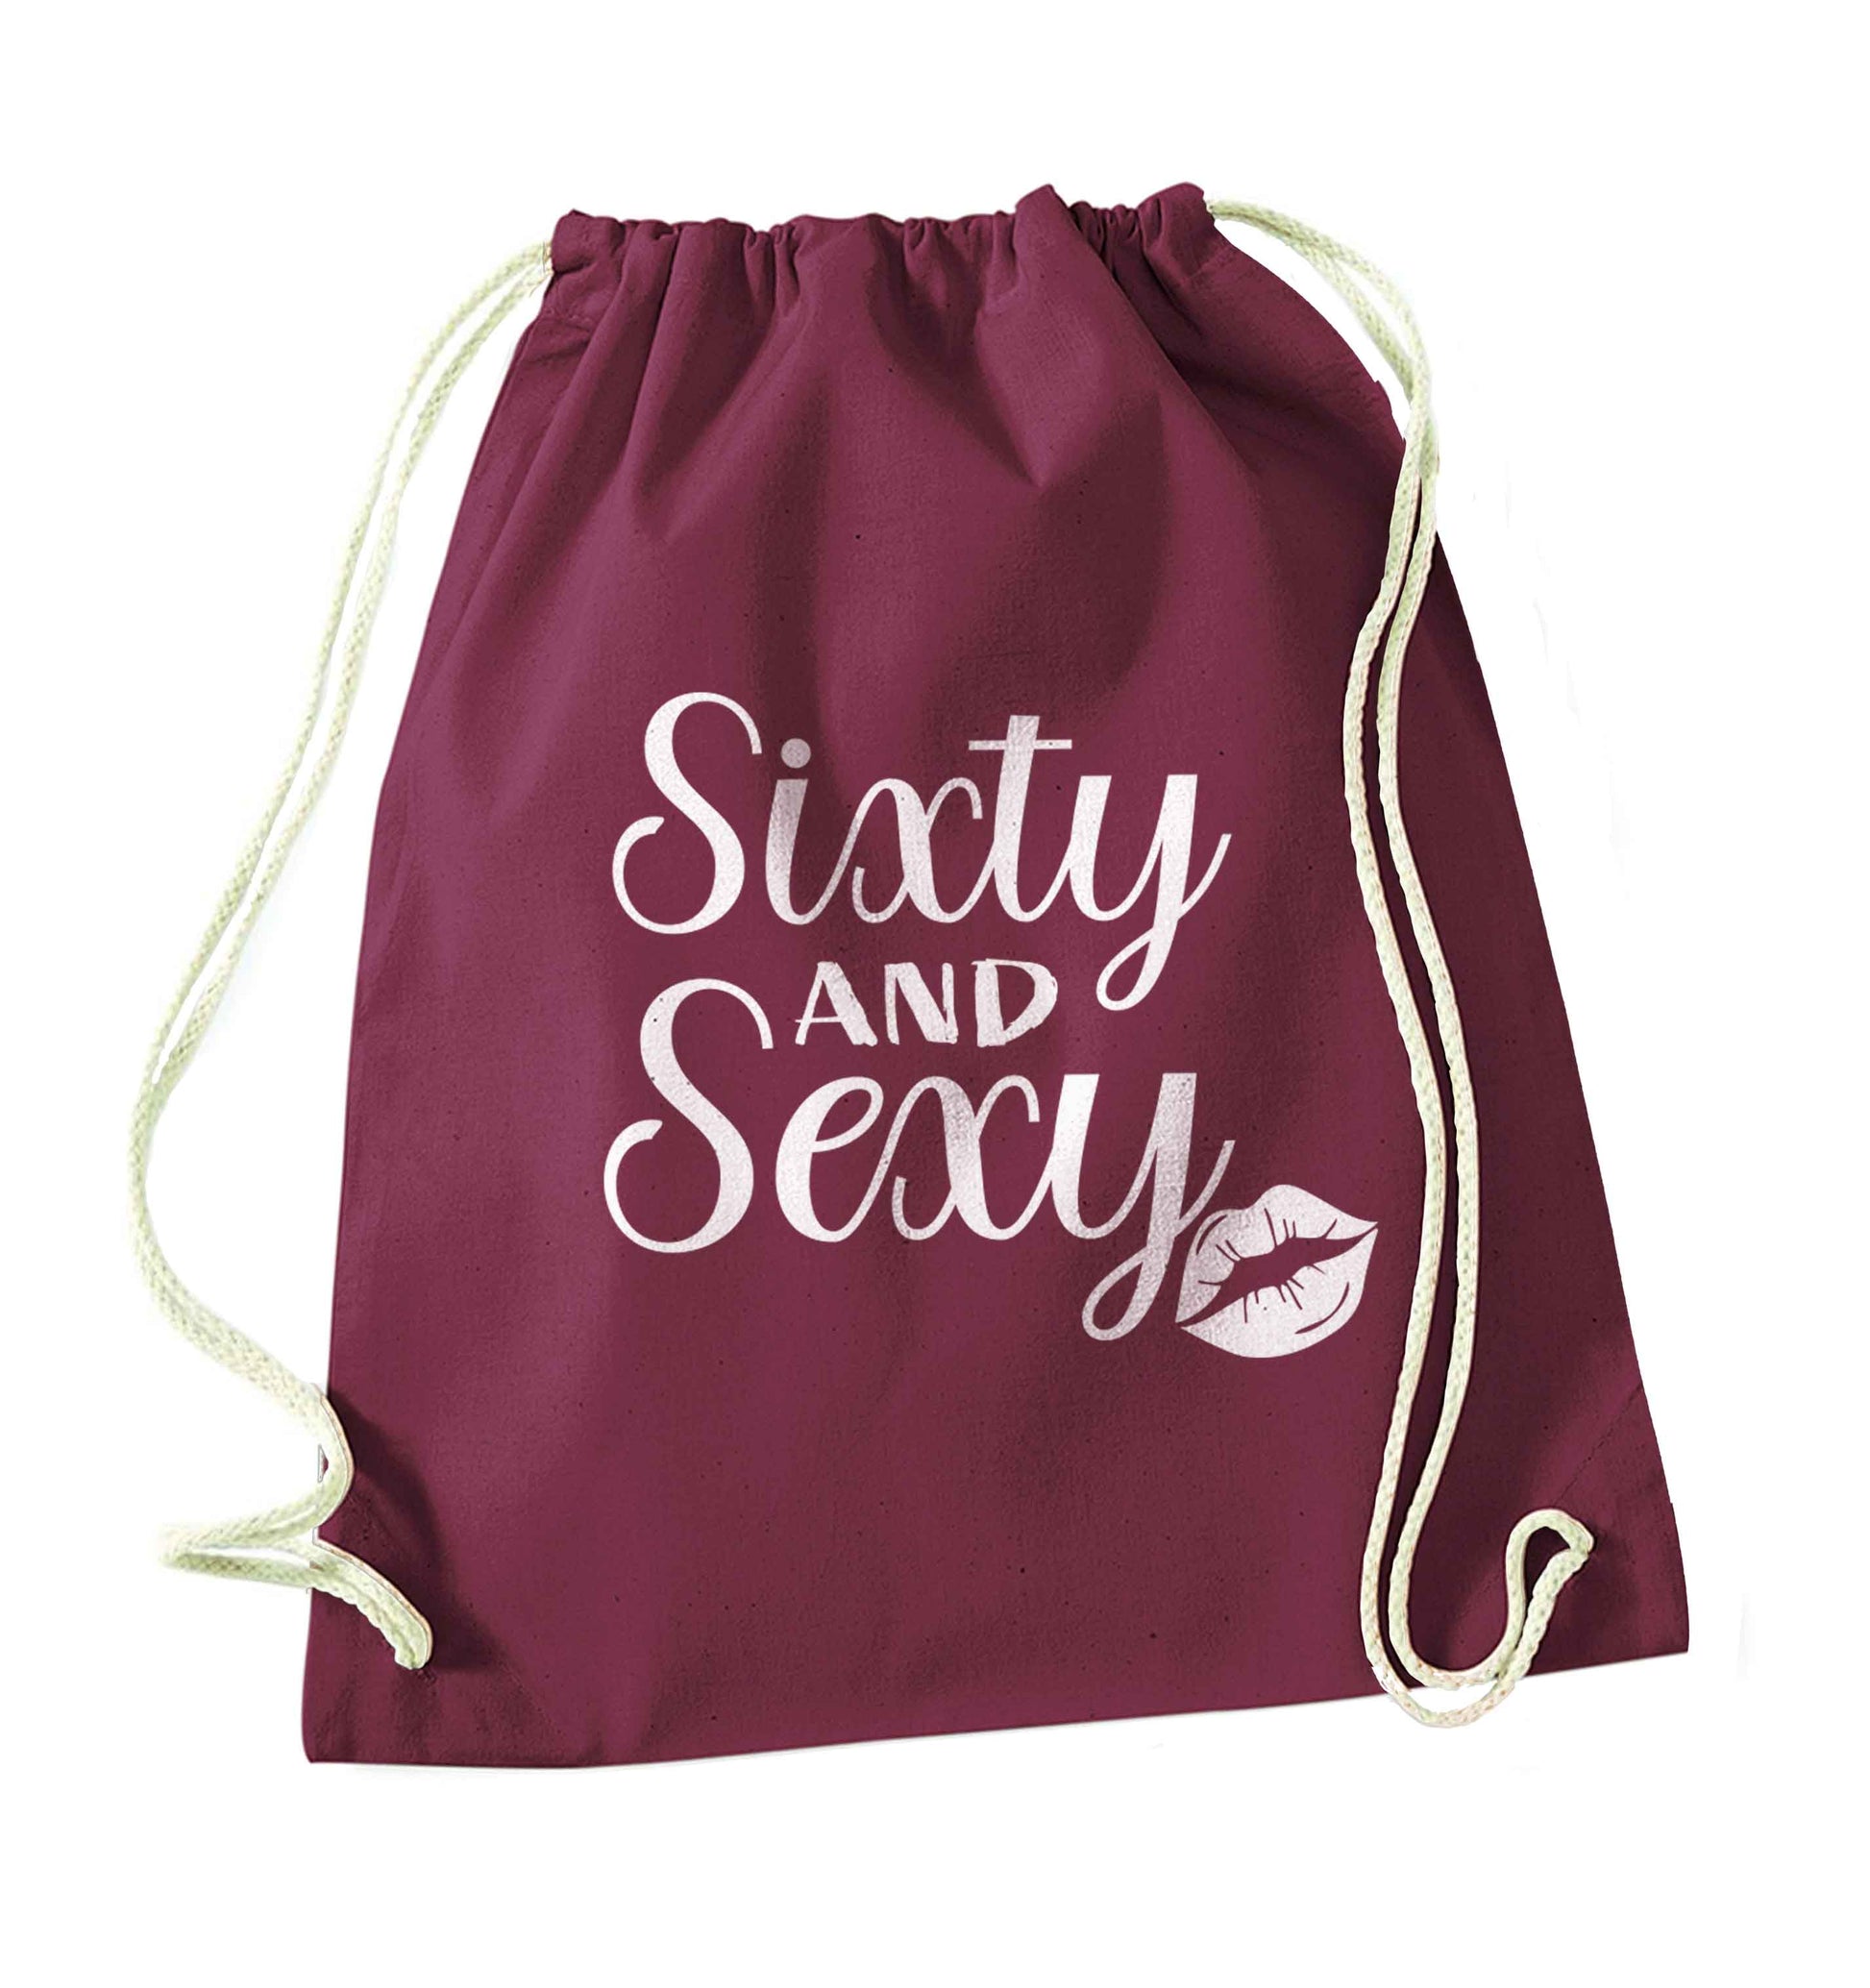 Sixty and sexy maroon drawstring bag